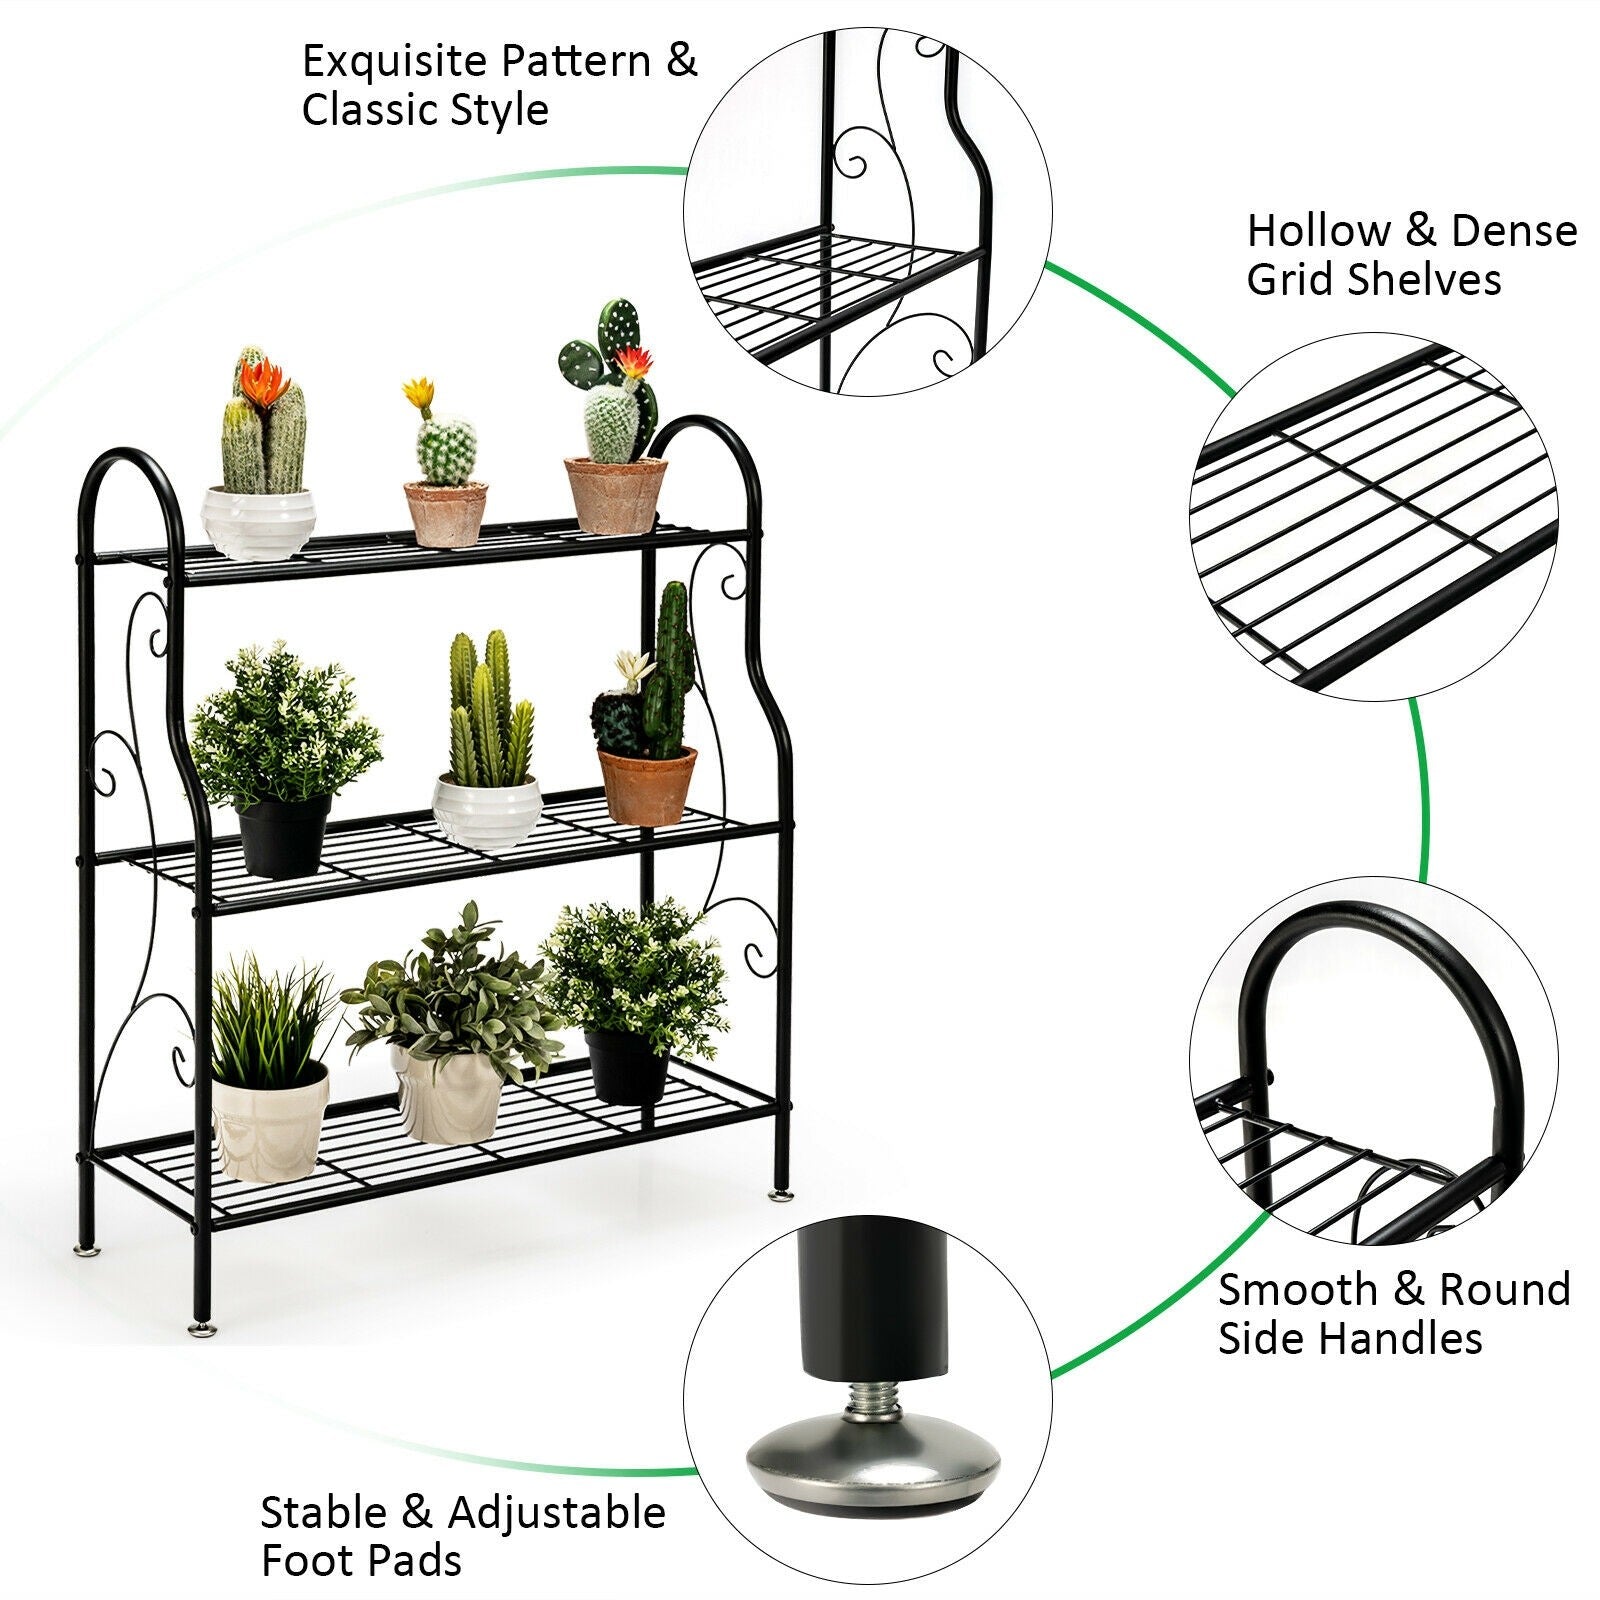 Wood Plant Stand, Multi Tier Flower Pot Holder Display Shelf